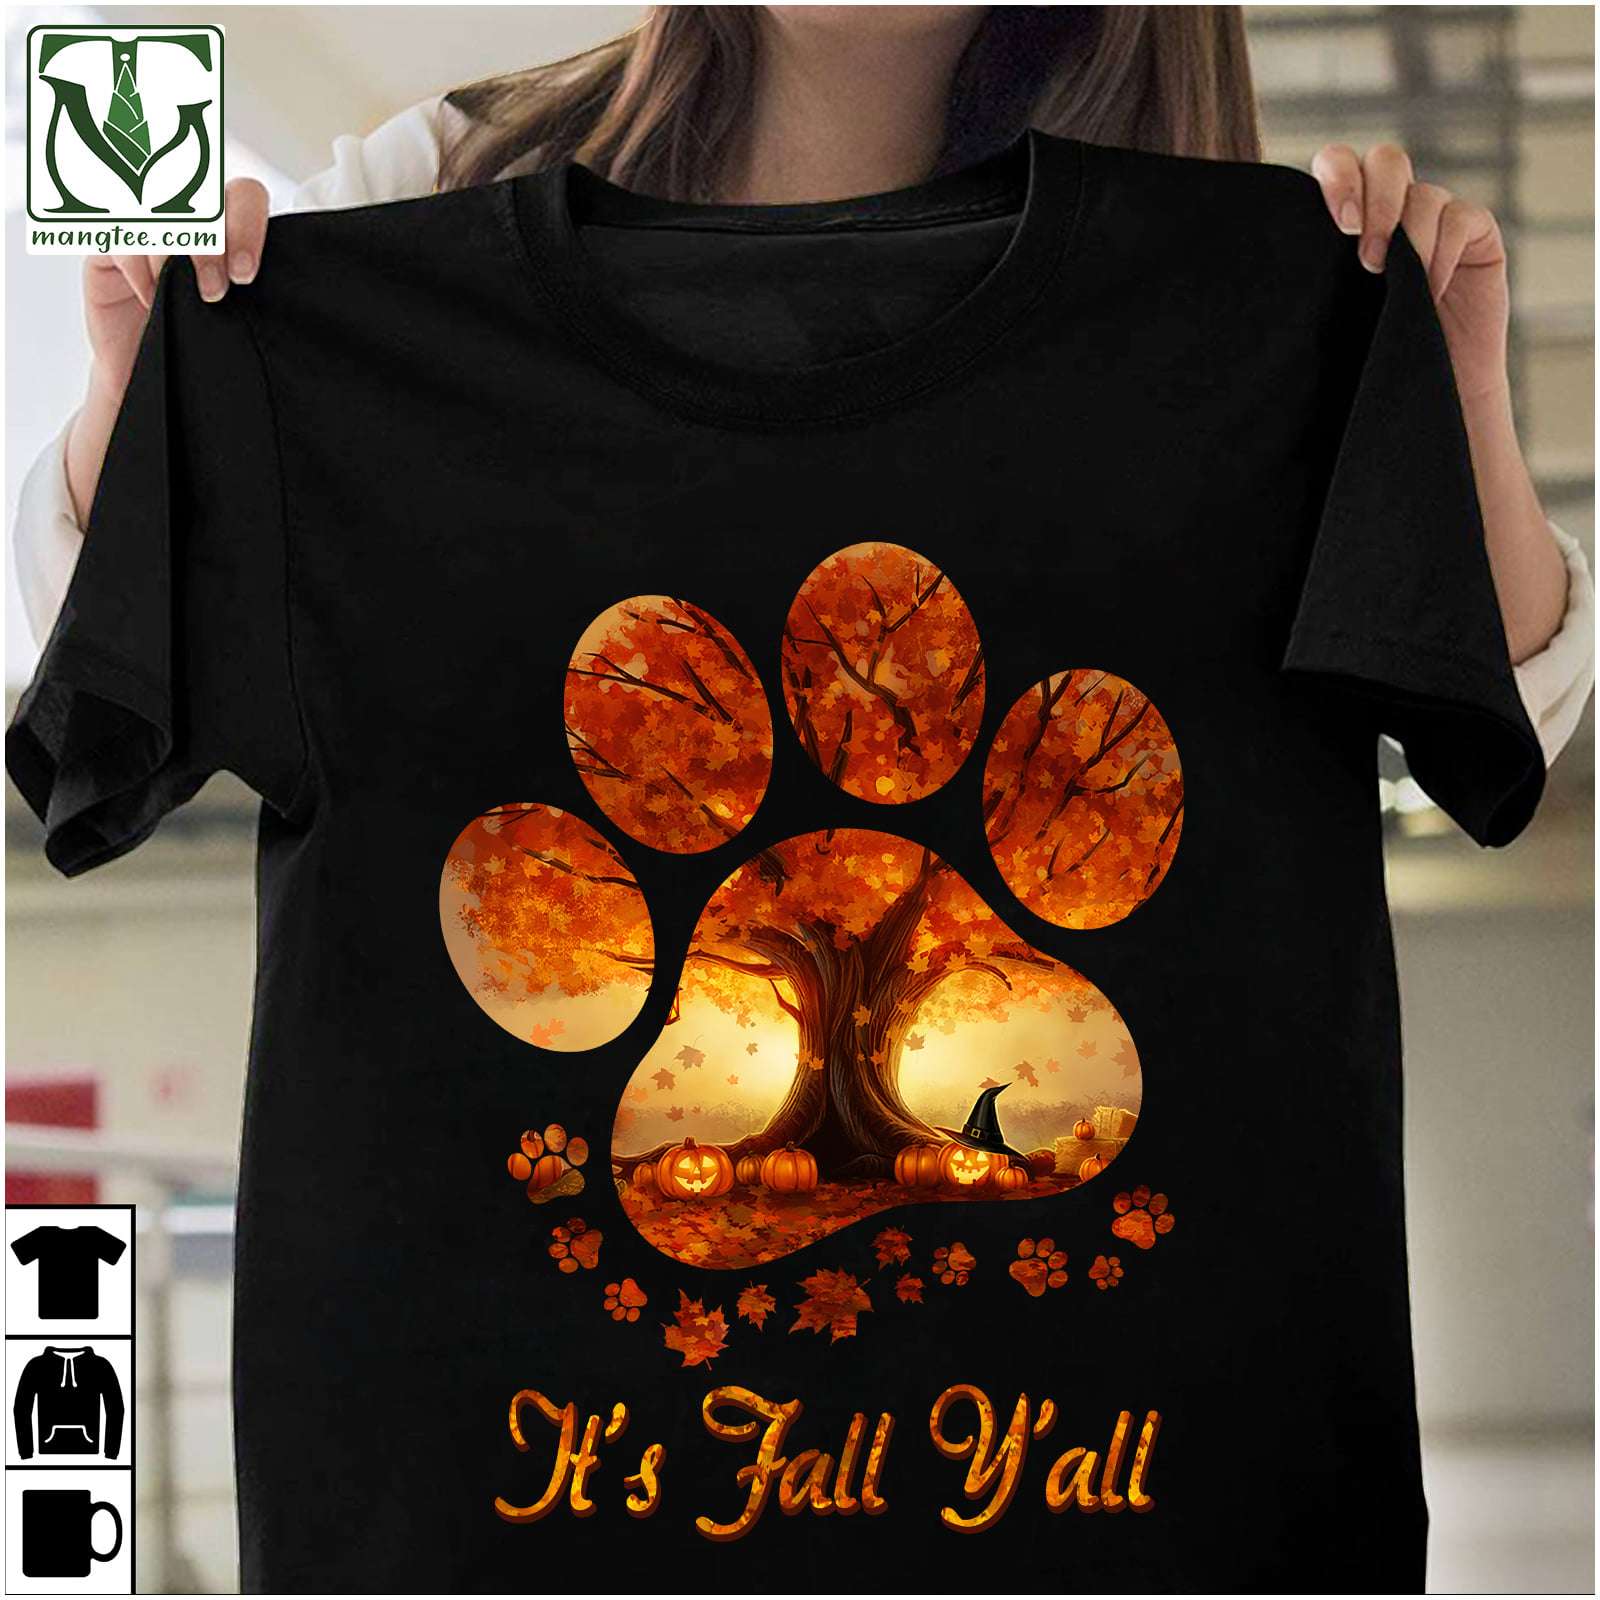 Its' fall y'all - Fall the season, dog paws